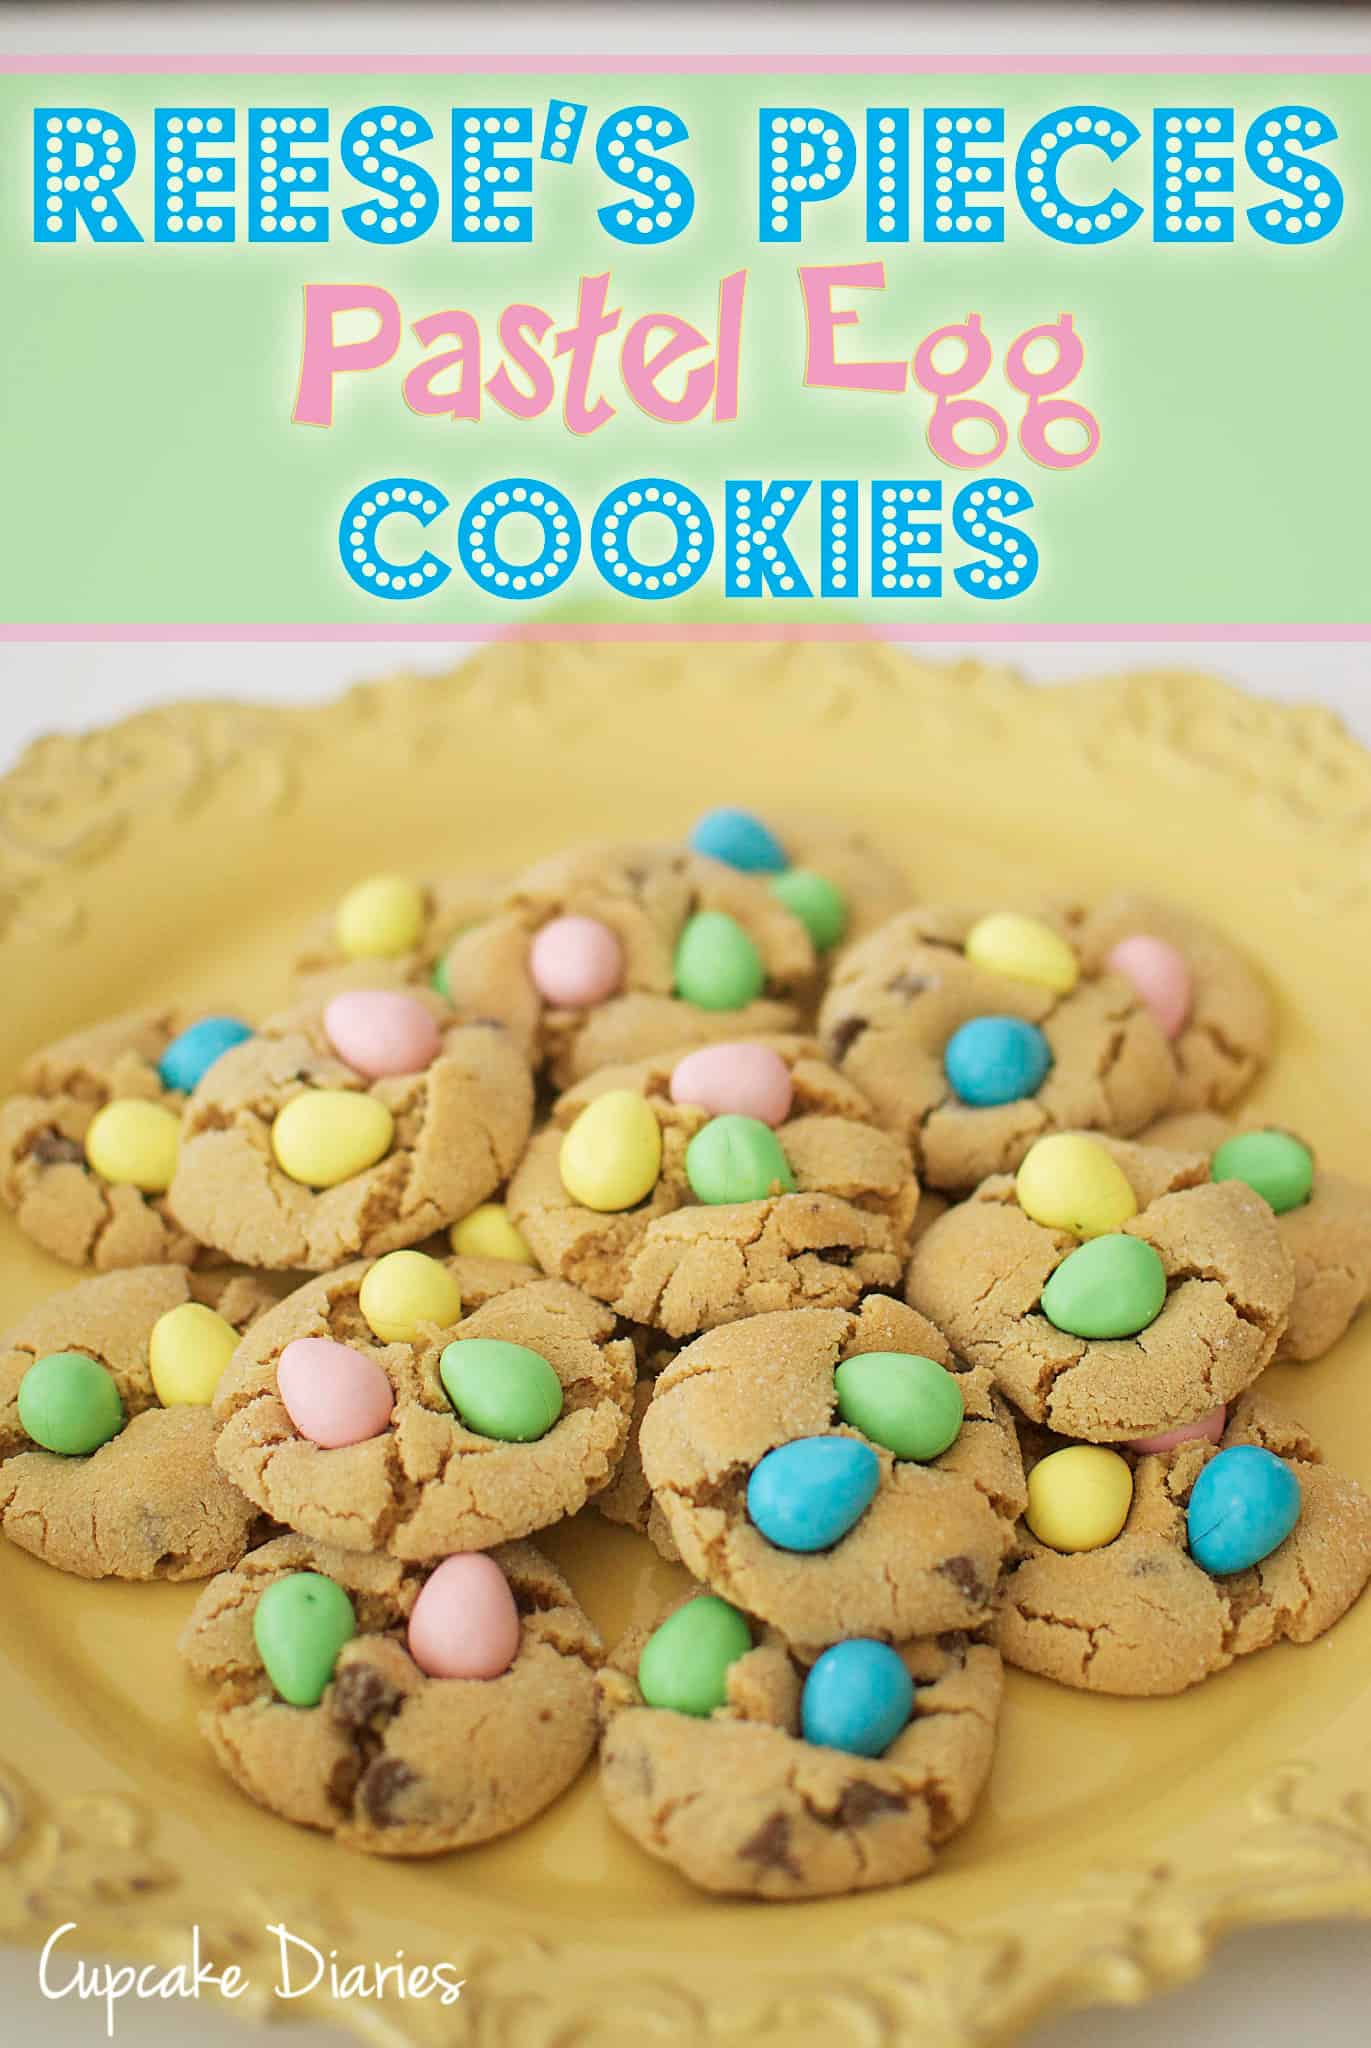 Reese's Pieces Pastel Egg Cookies - Cupcake Diaries